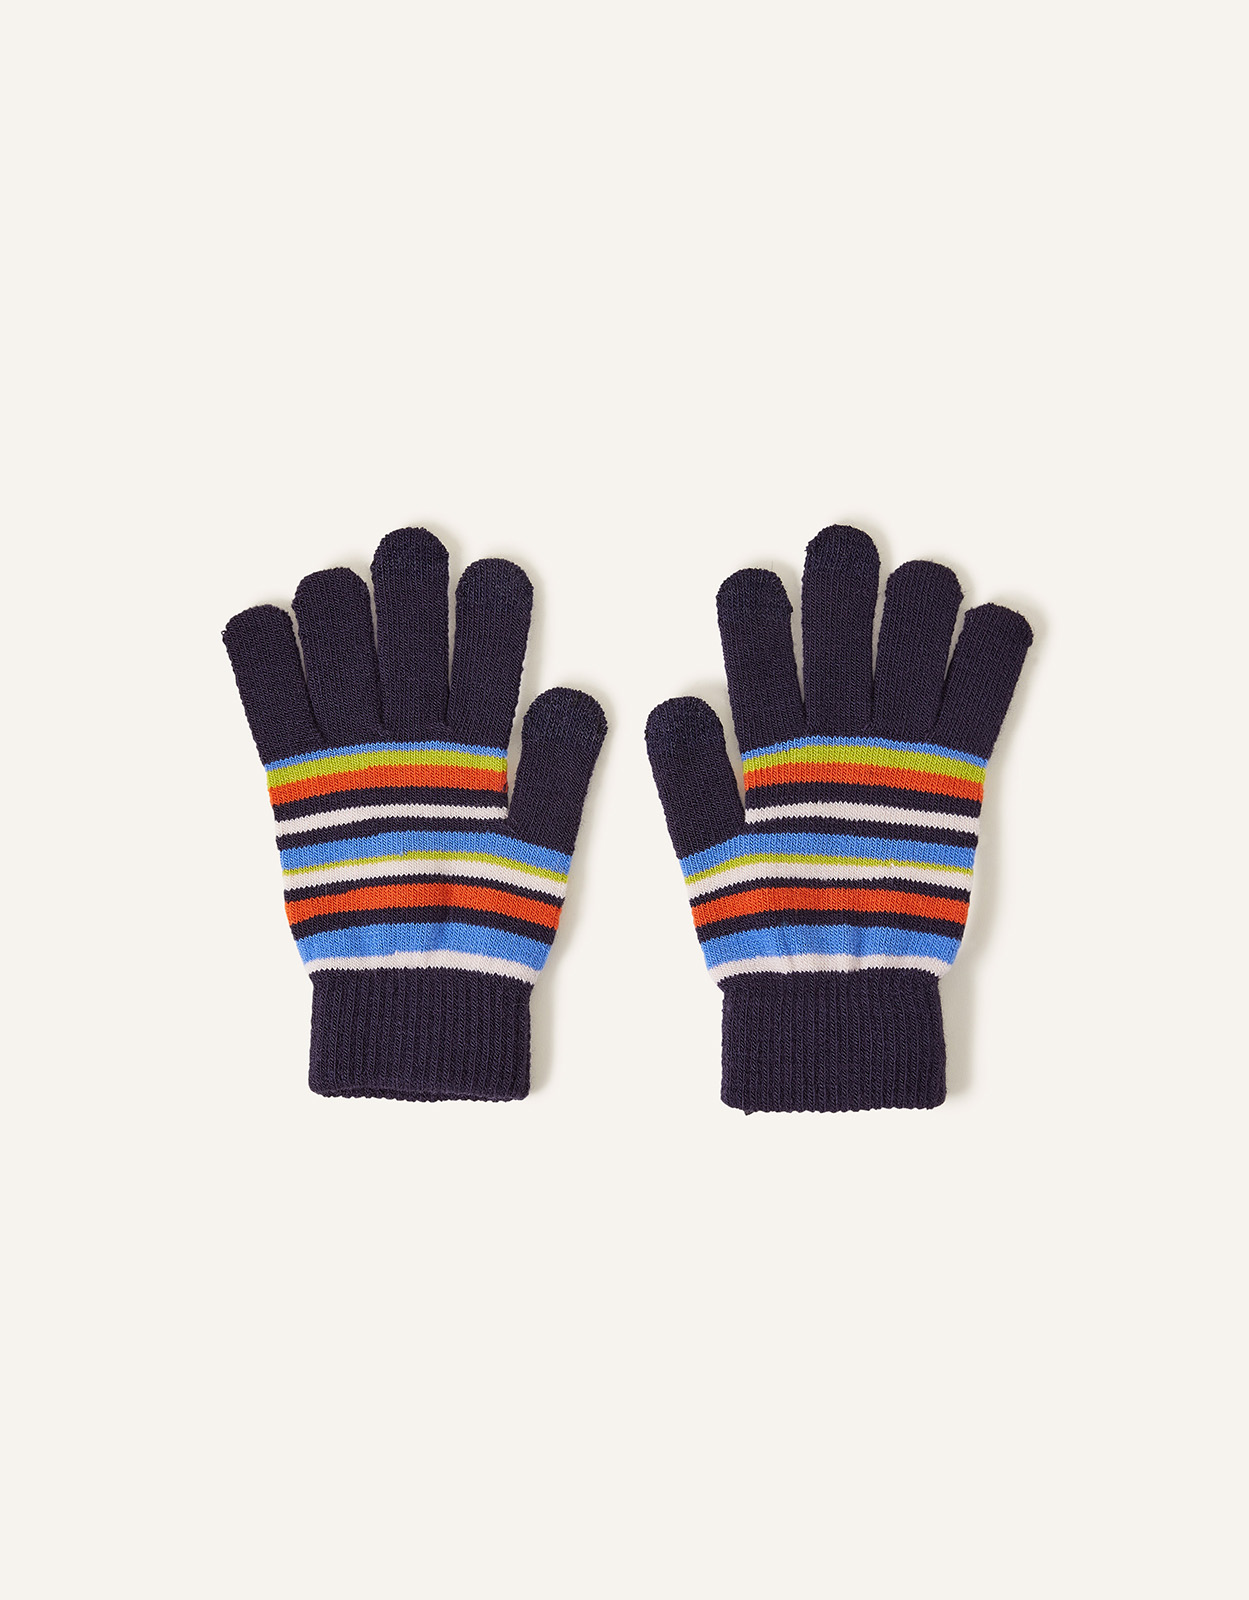 Accessorize Stripe Superstretch Touchscreen Gloves, Size: 9x21cm